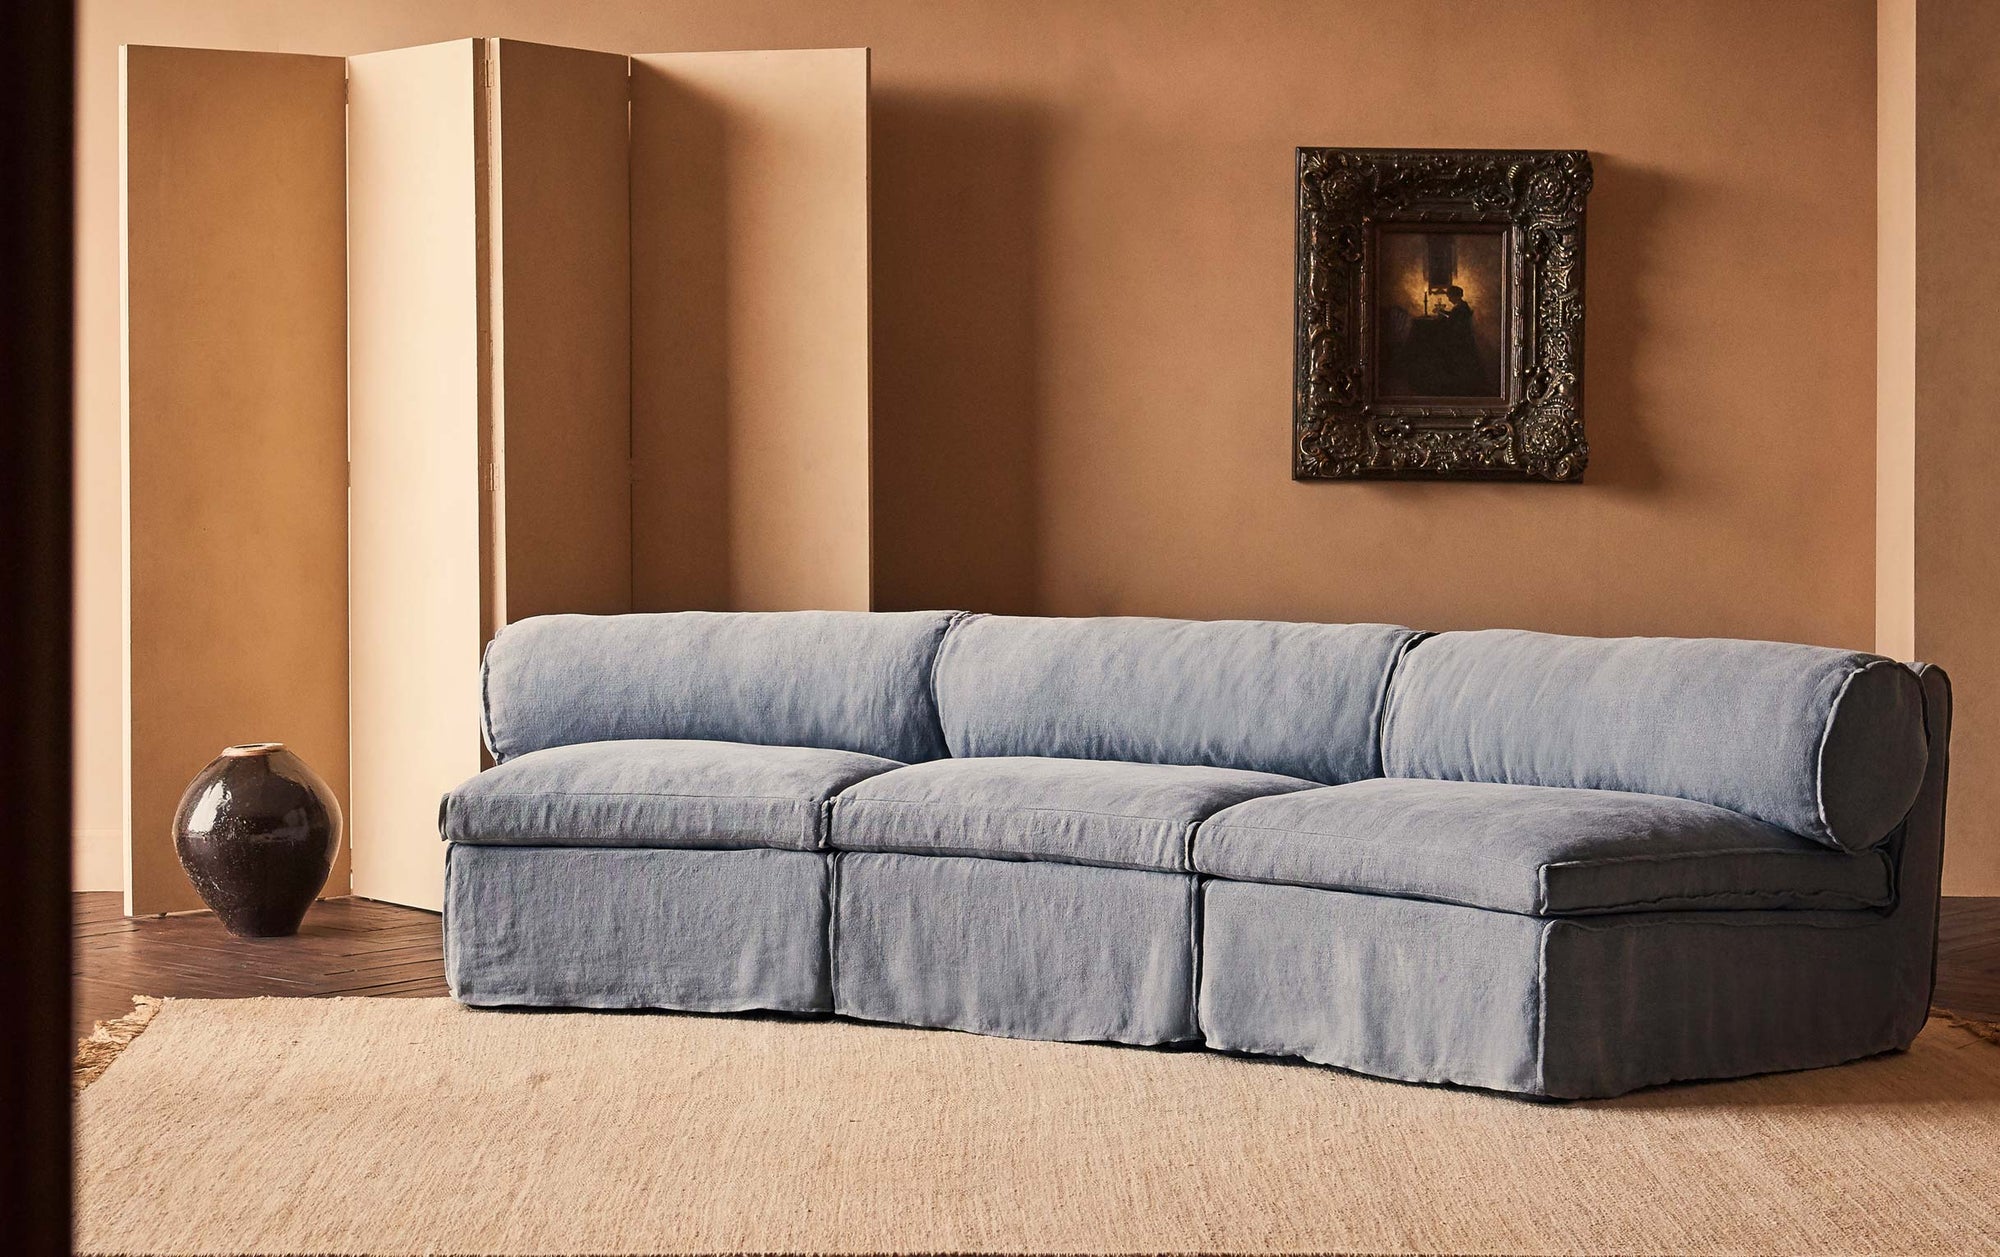 Camino Sectional Sofa, 3-piece in Ink Cap, a medium cool grey Light Weight Linen